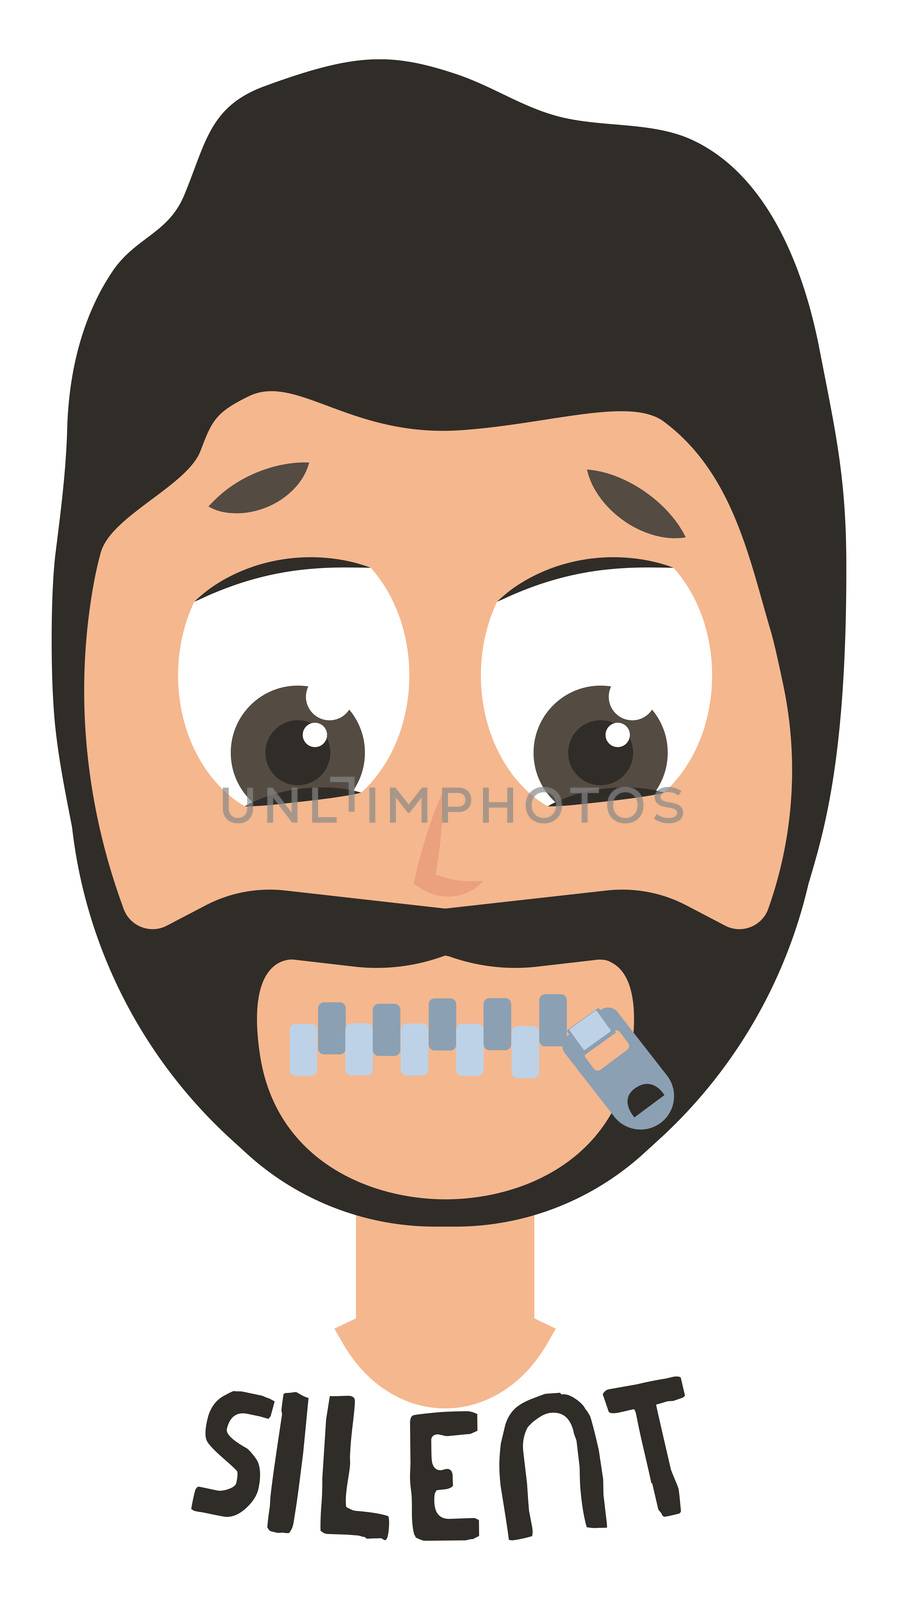 Silent man emoji, illustration, vector on white background by Morphart